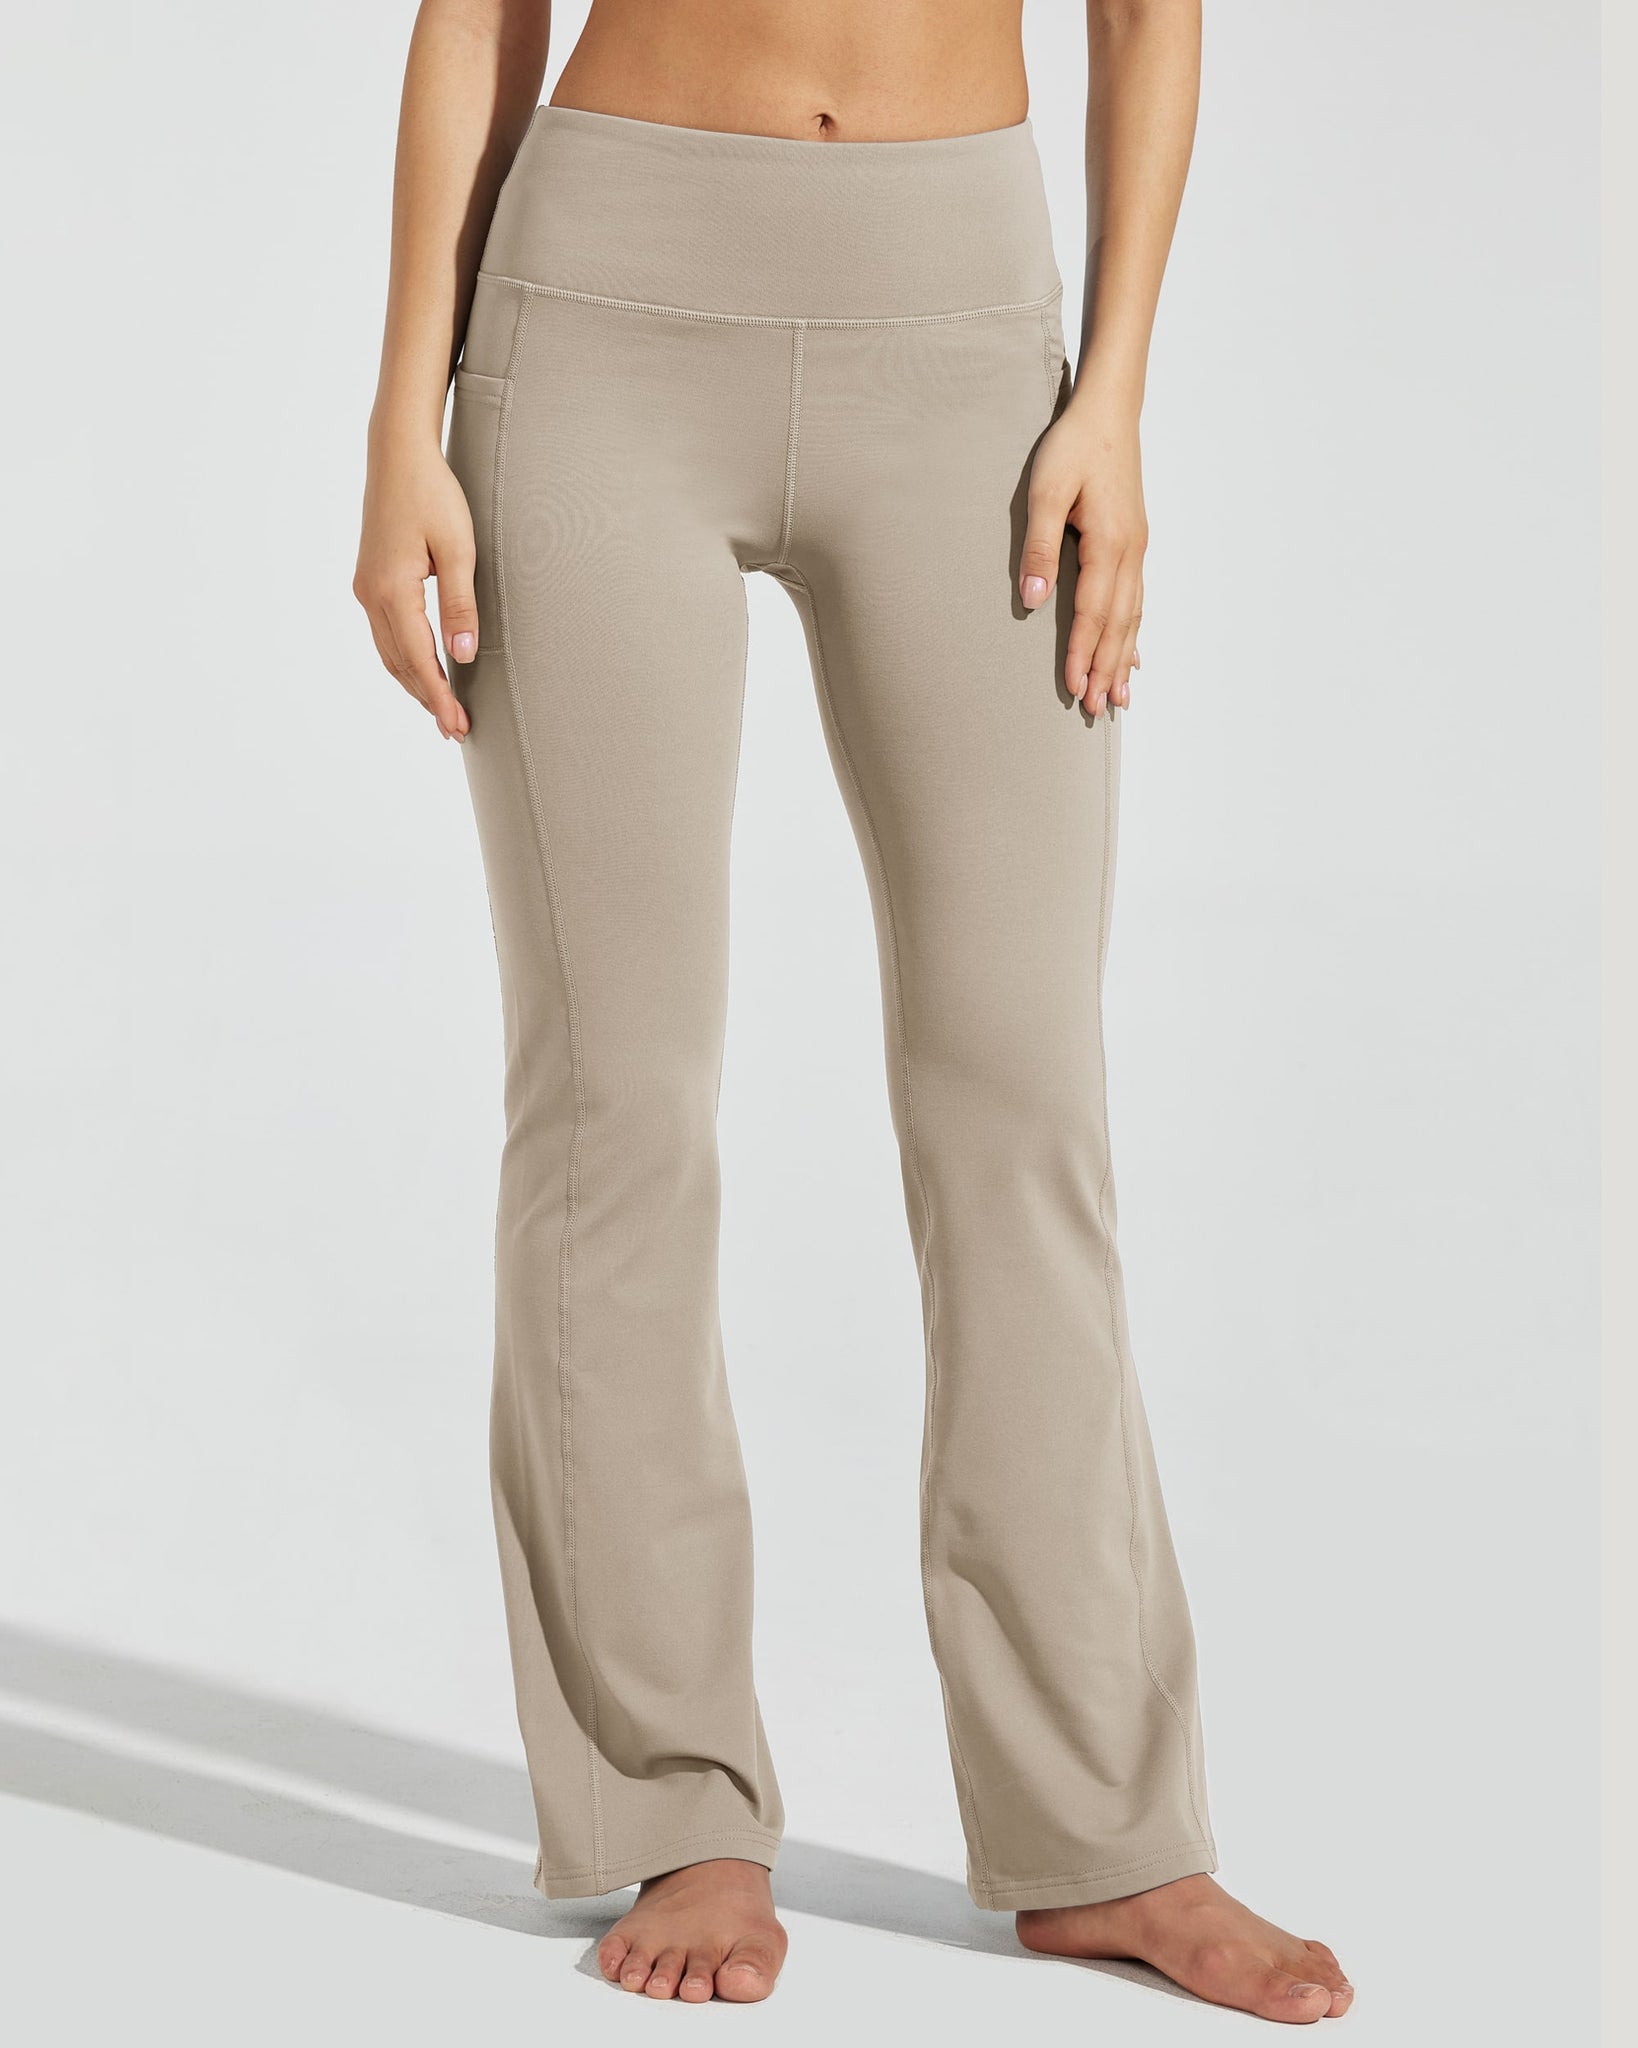 Women's Fleece Lined Bootcut Yoga Pants_Khaki_model1